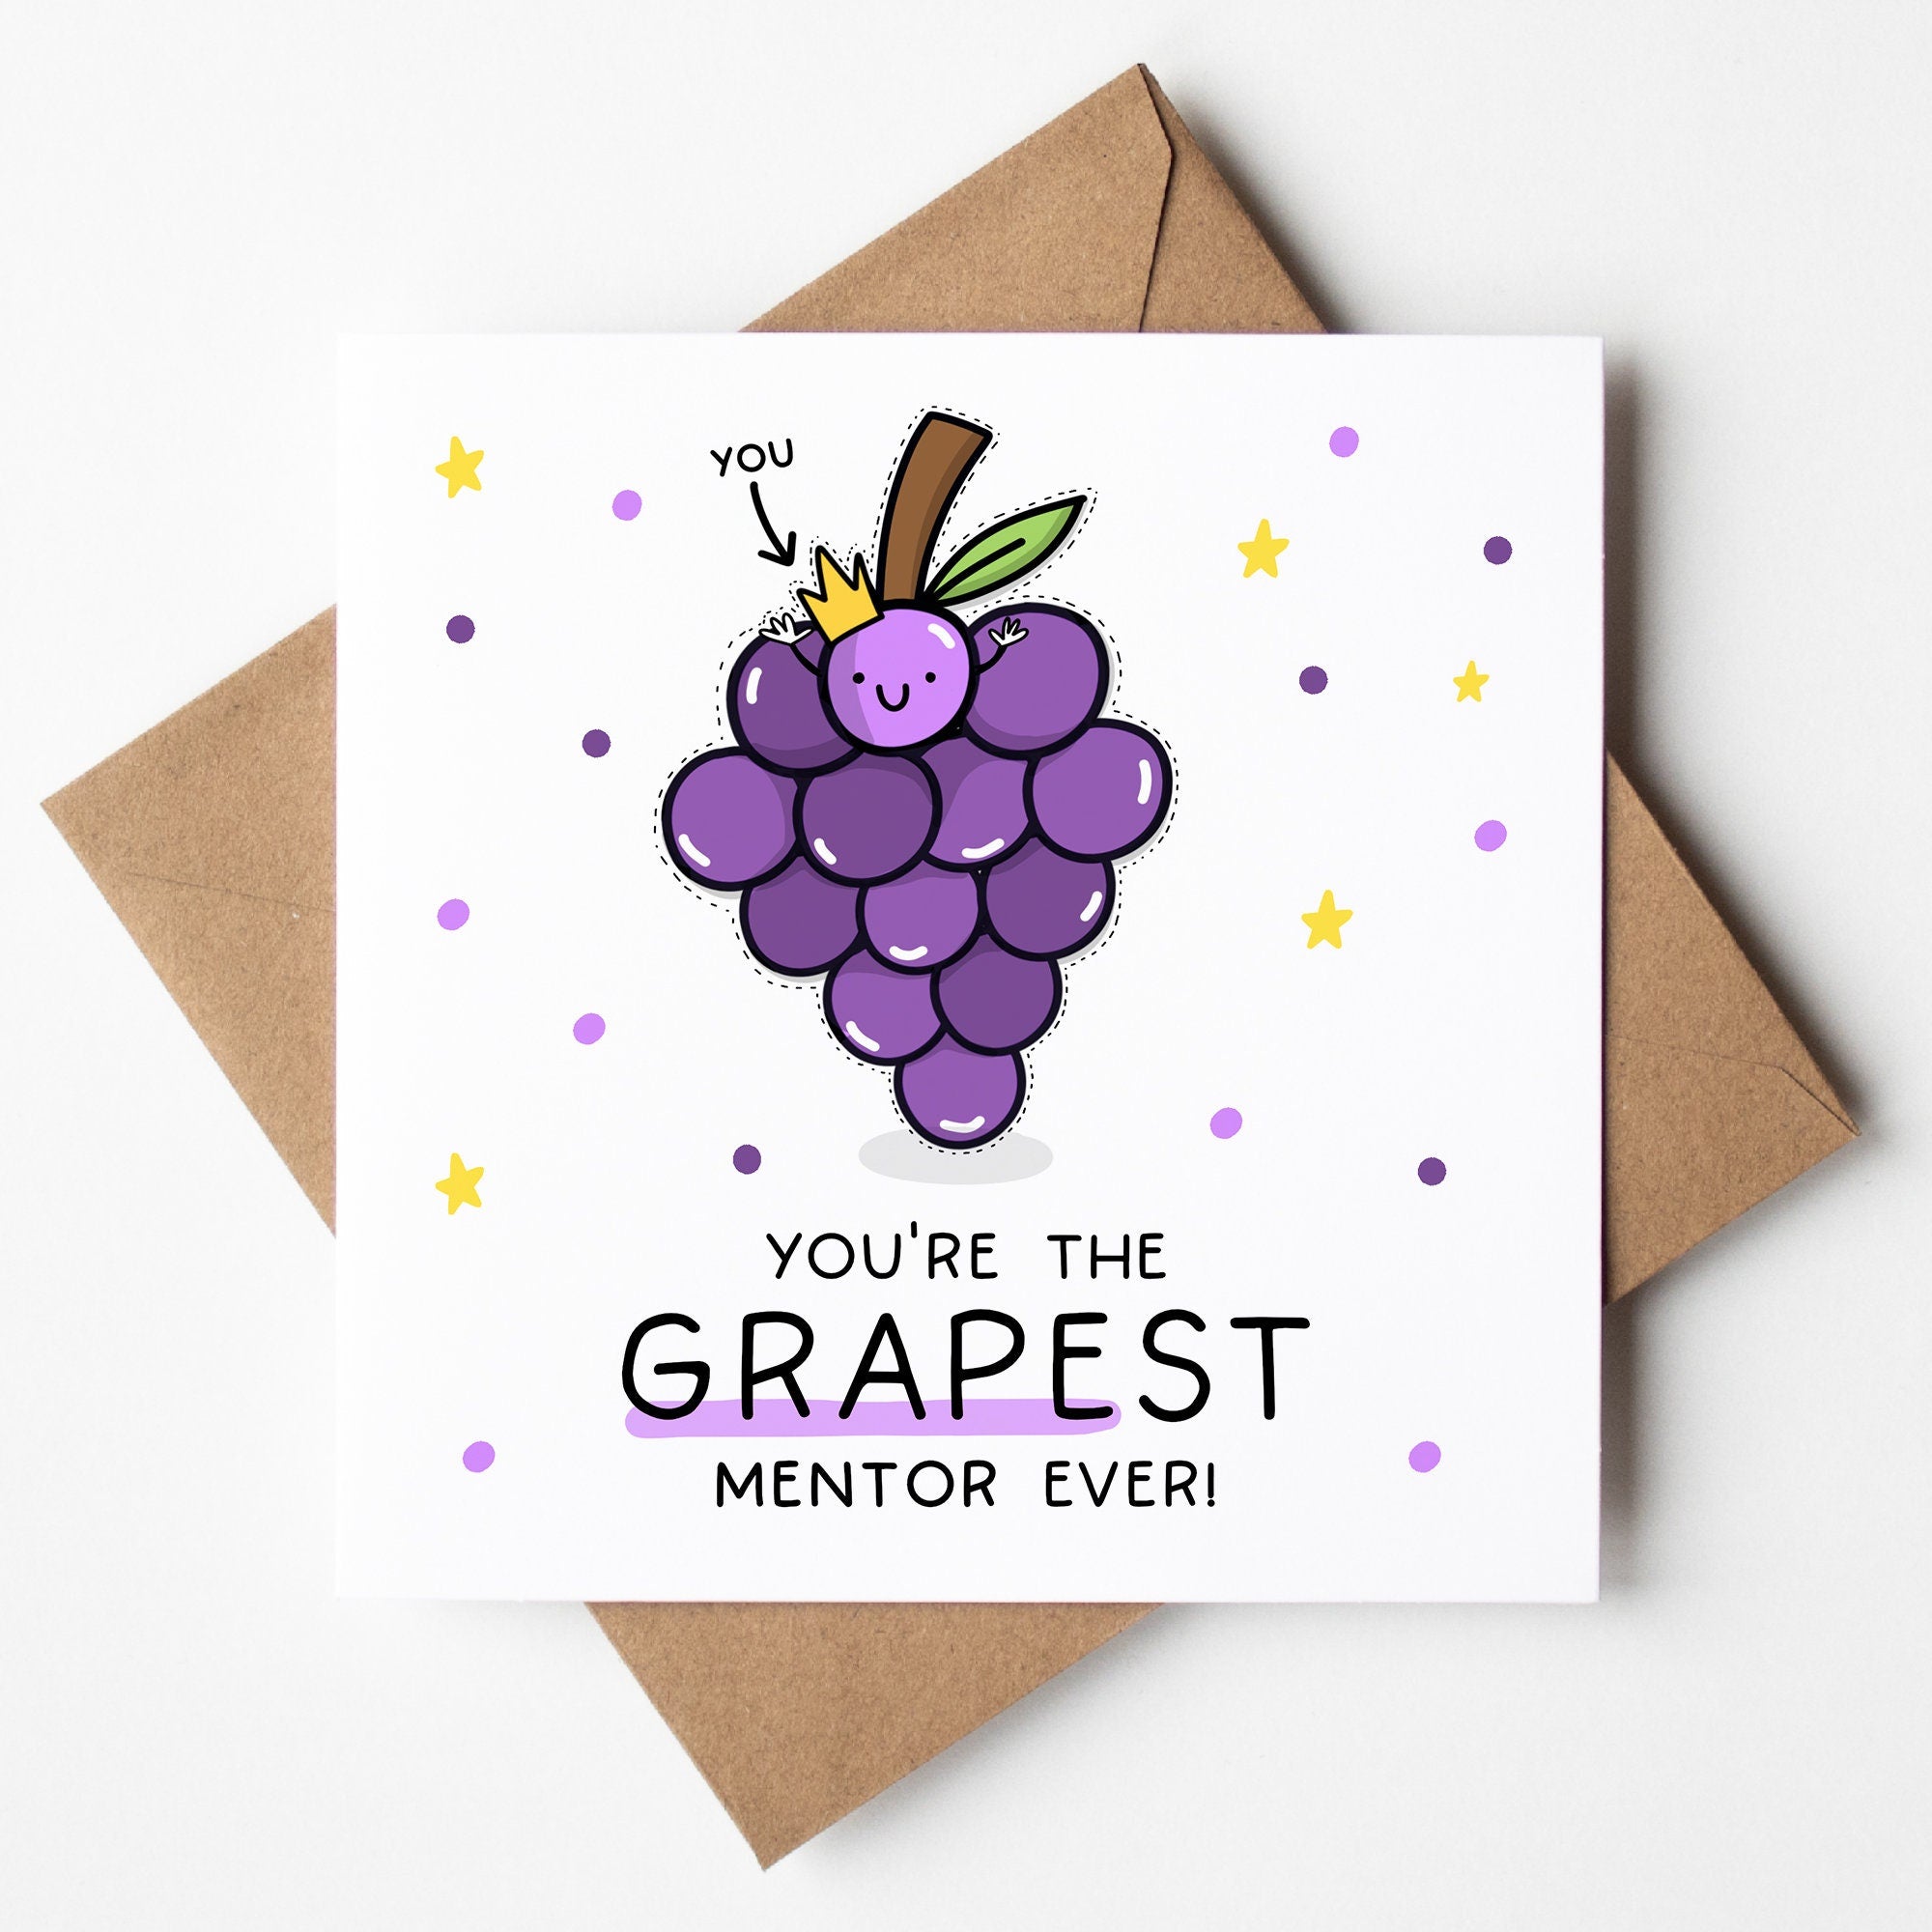 Mentor Thank You Card - Grapest Mentor Ever